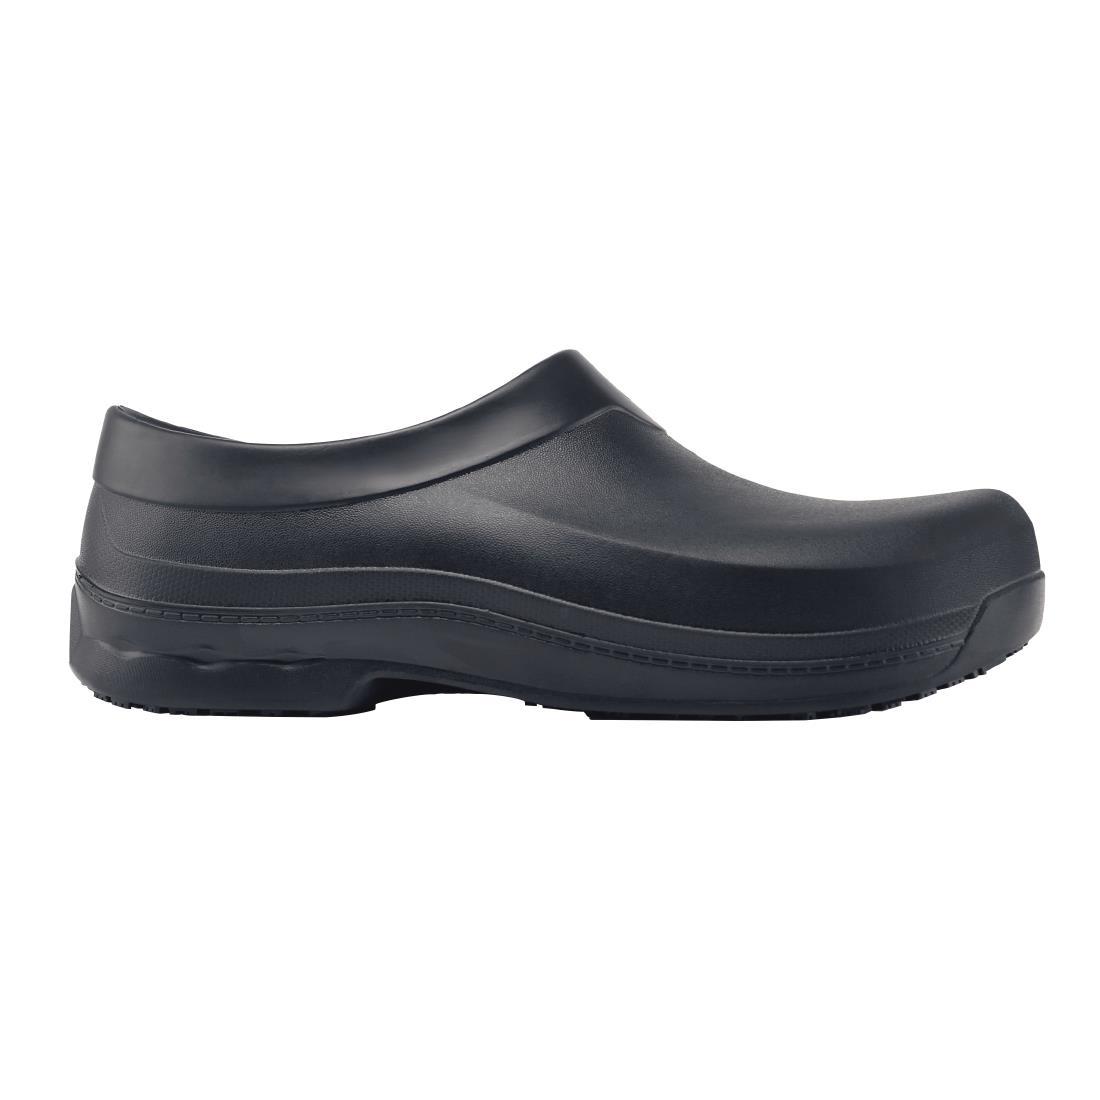 Shoes for Crews Radium Clogs Black Size 40 - BB581-40  - 1